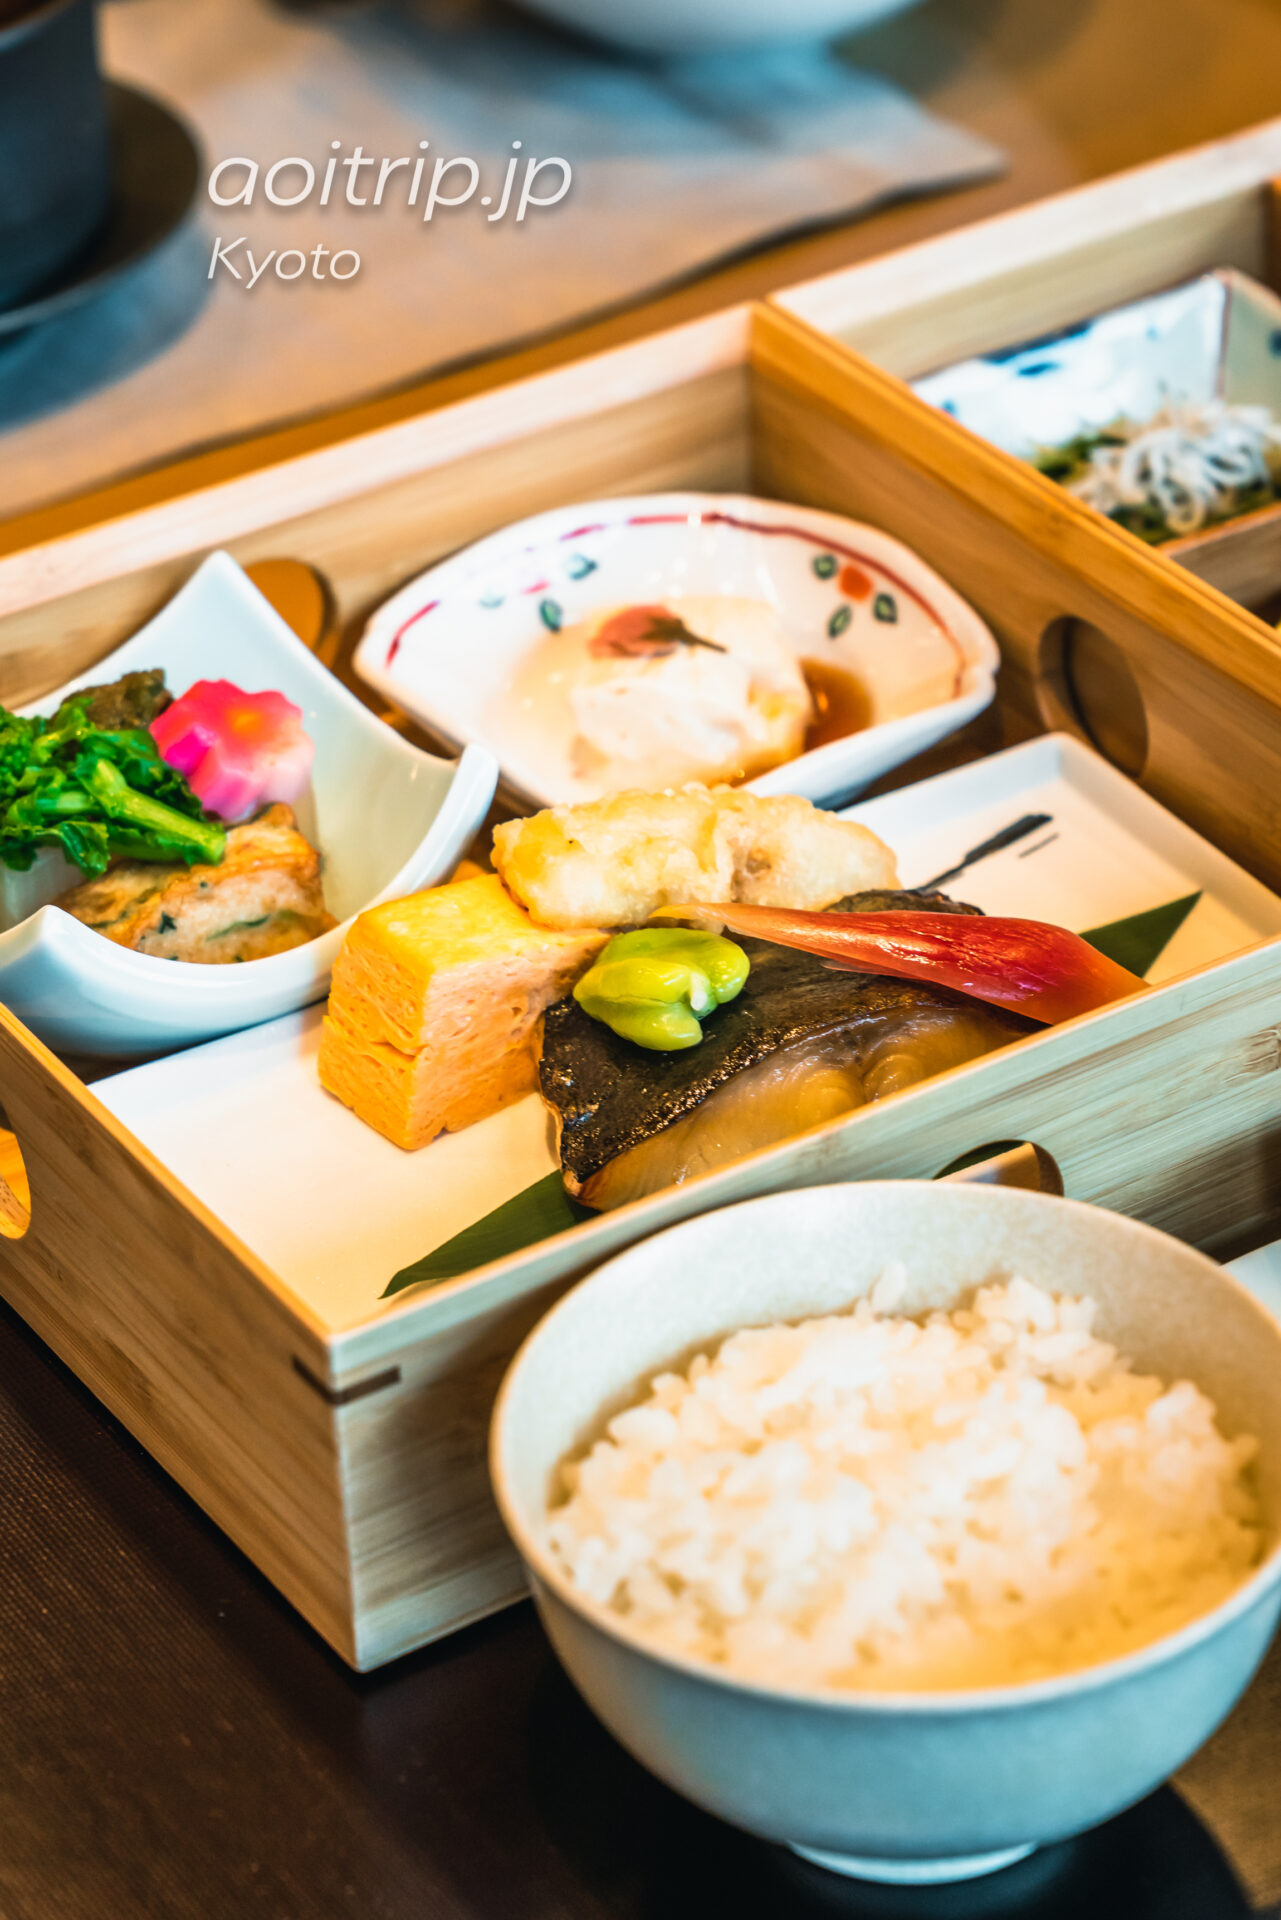 HOTEL THE MITSUI KYOTO, THE GARDEN BARの和朝食